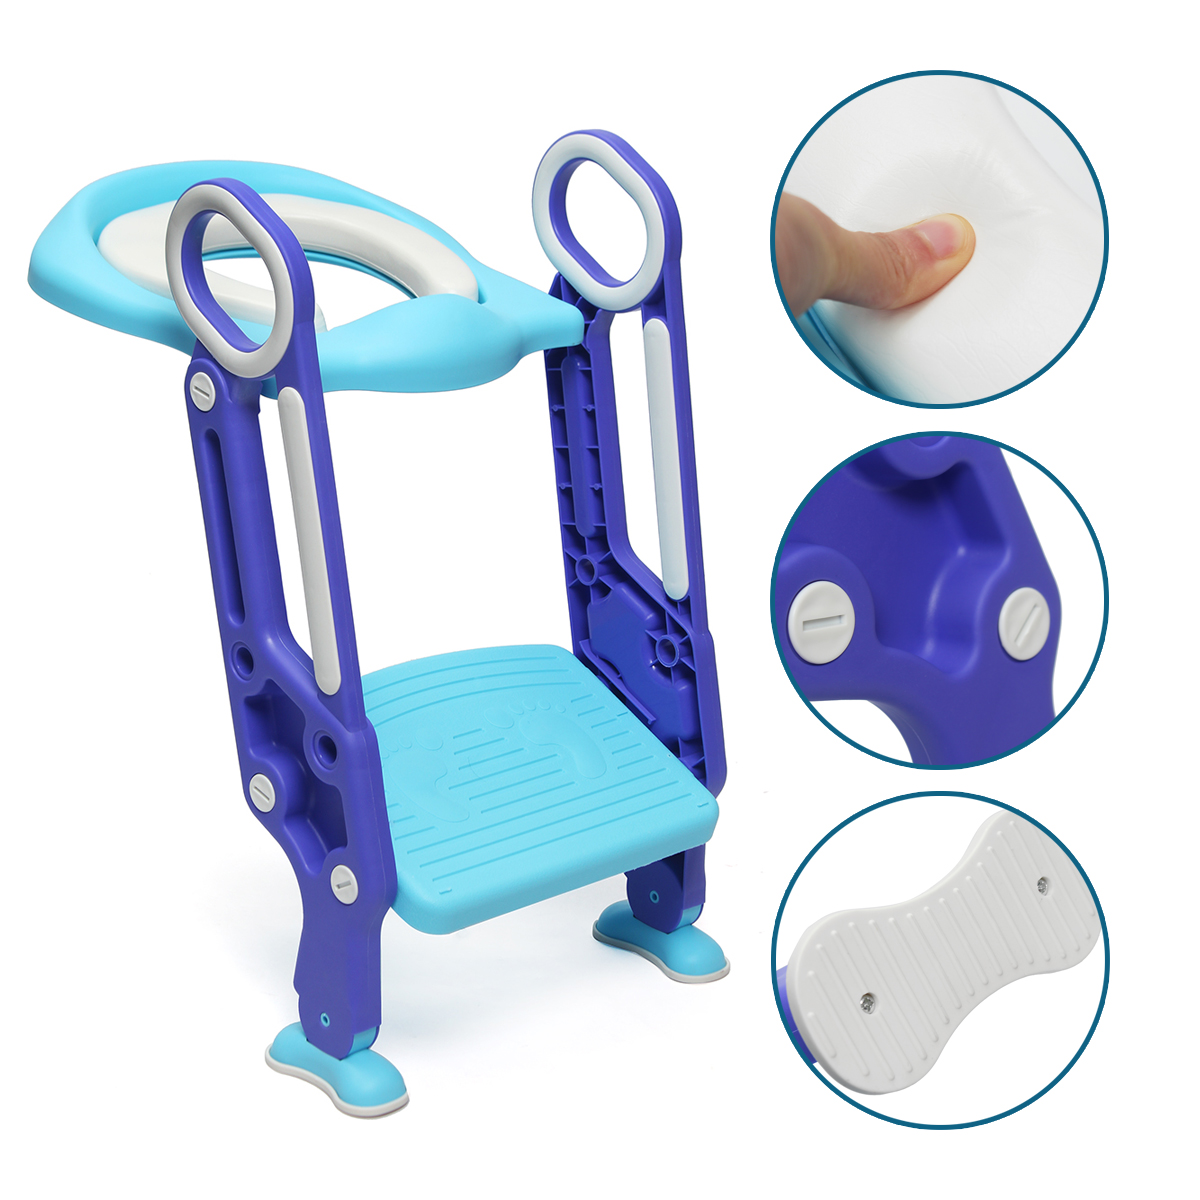 Kids-Baby-Toddler-Potty-Training-Toilet-Seat-amp-Step-Ladder-Soft-Cushion-1553353